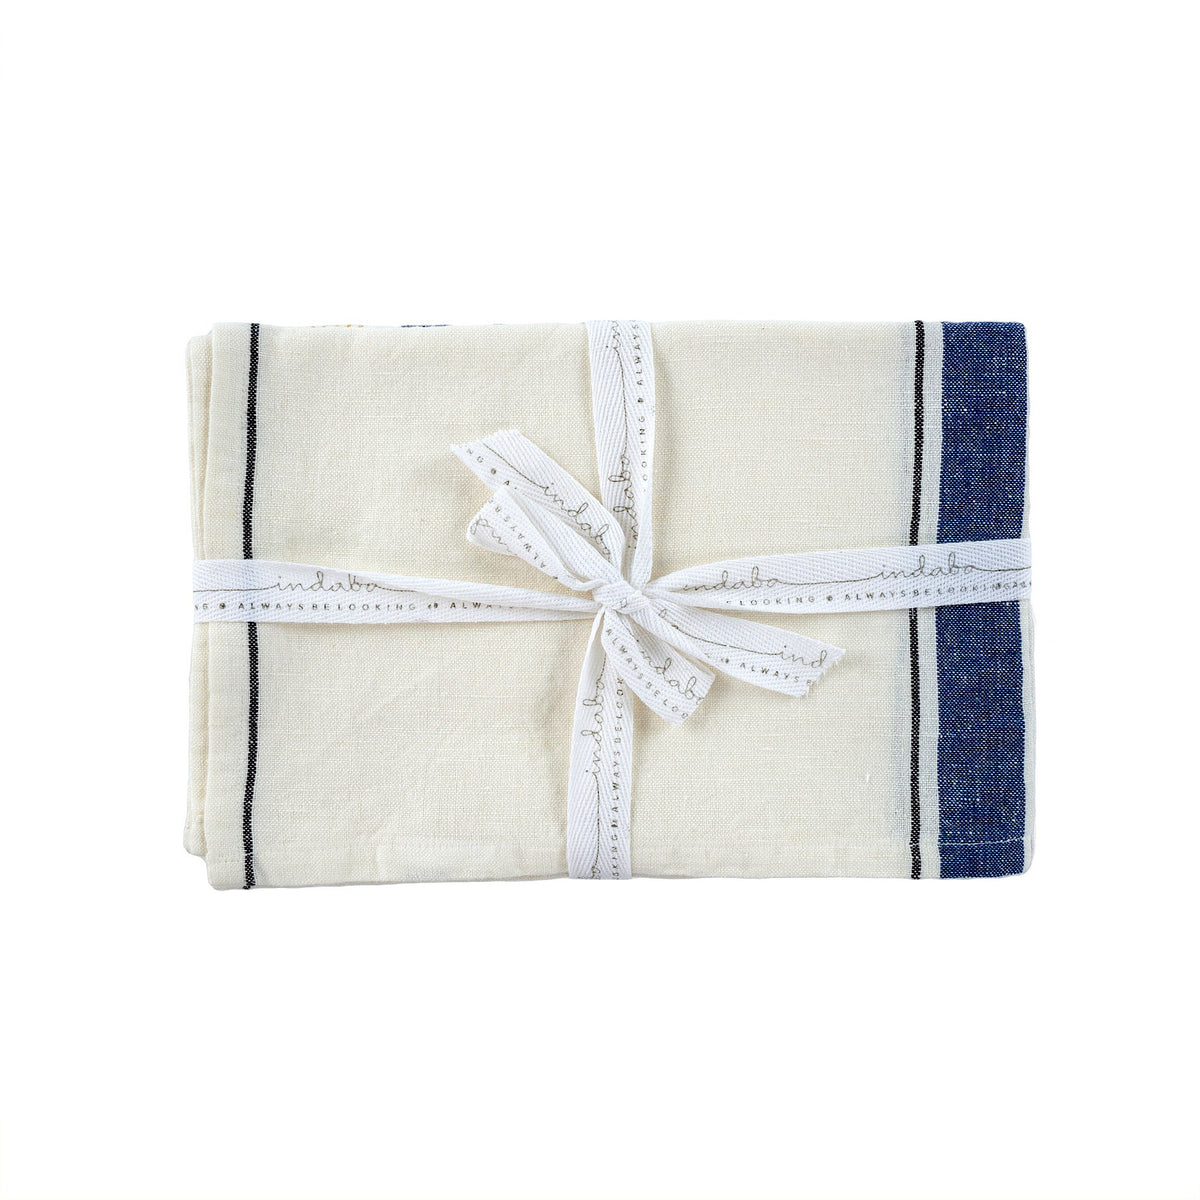 French Stripe Linen Tea Towel, Navy, Set of 2